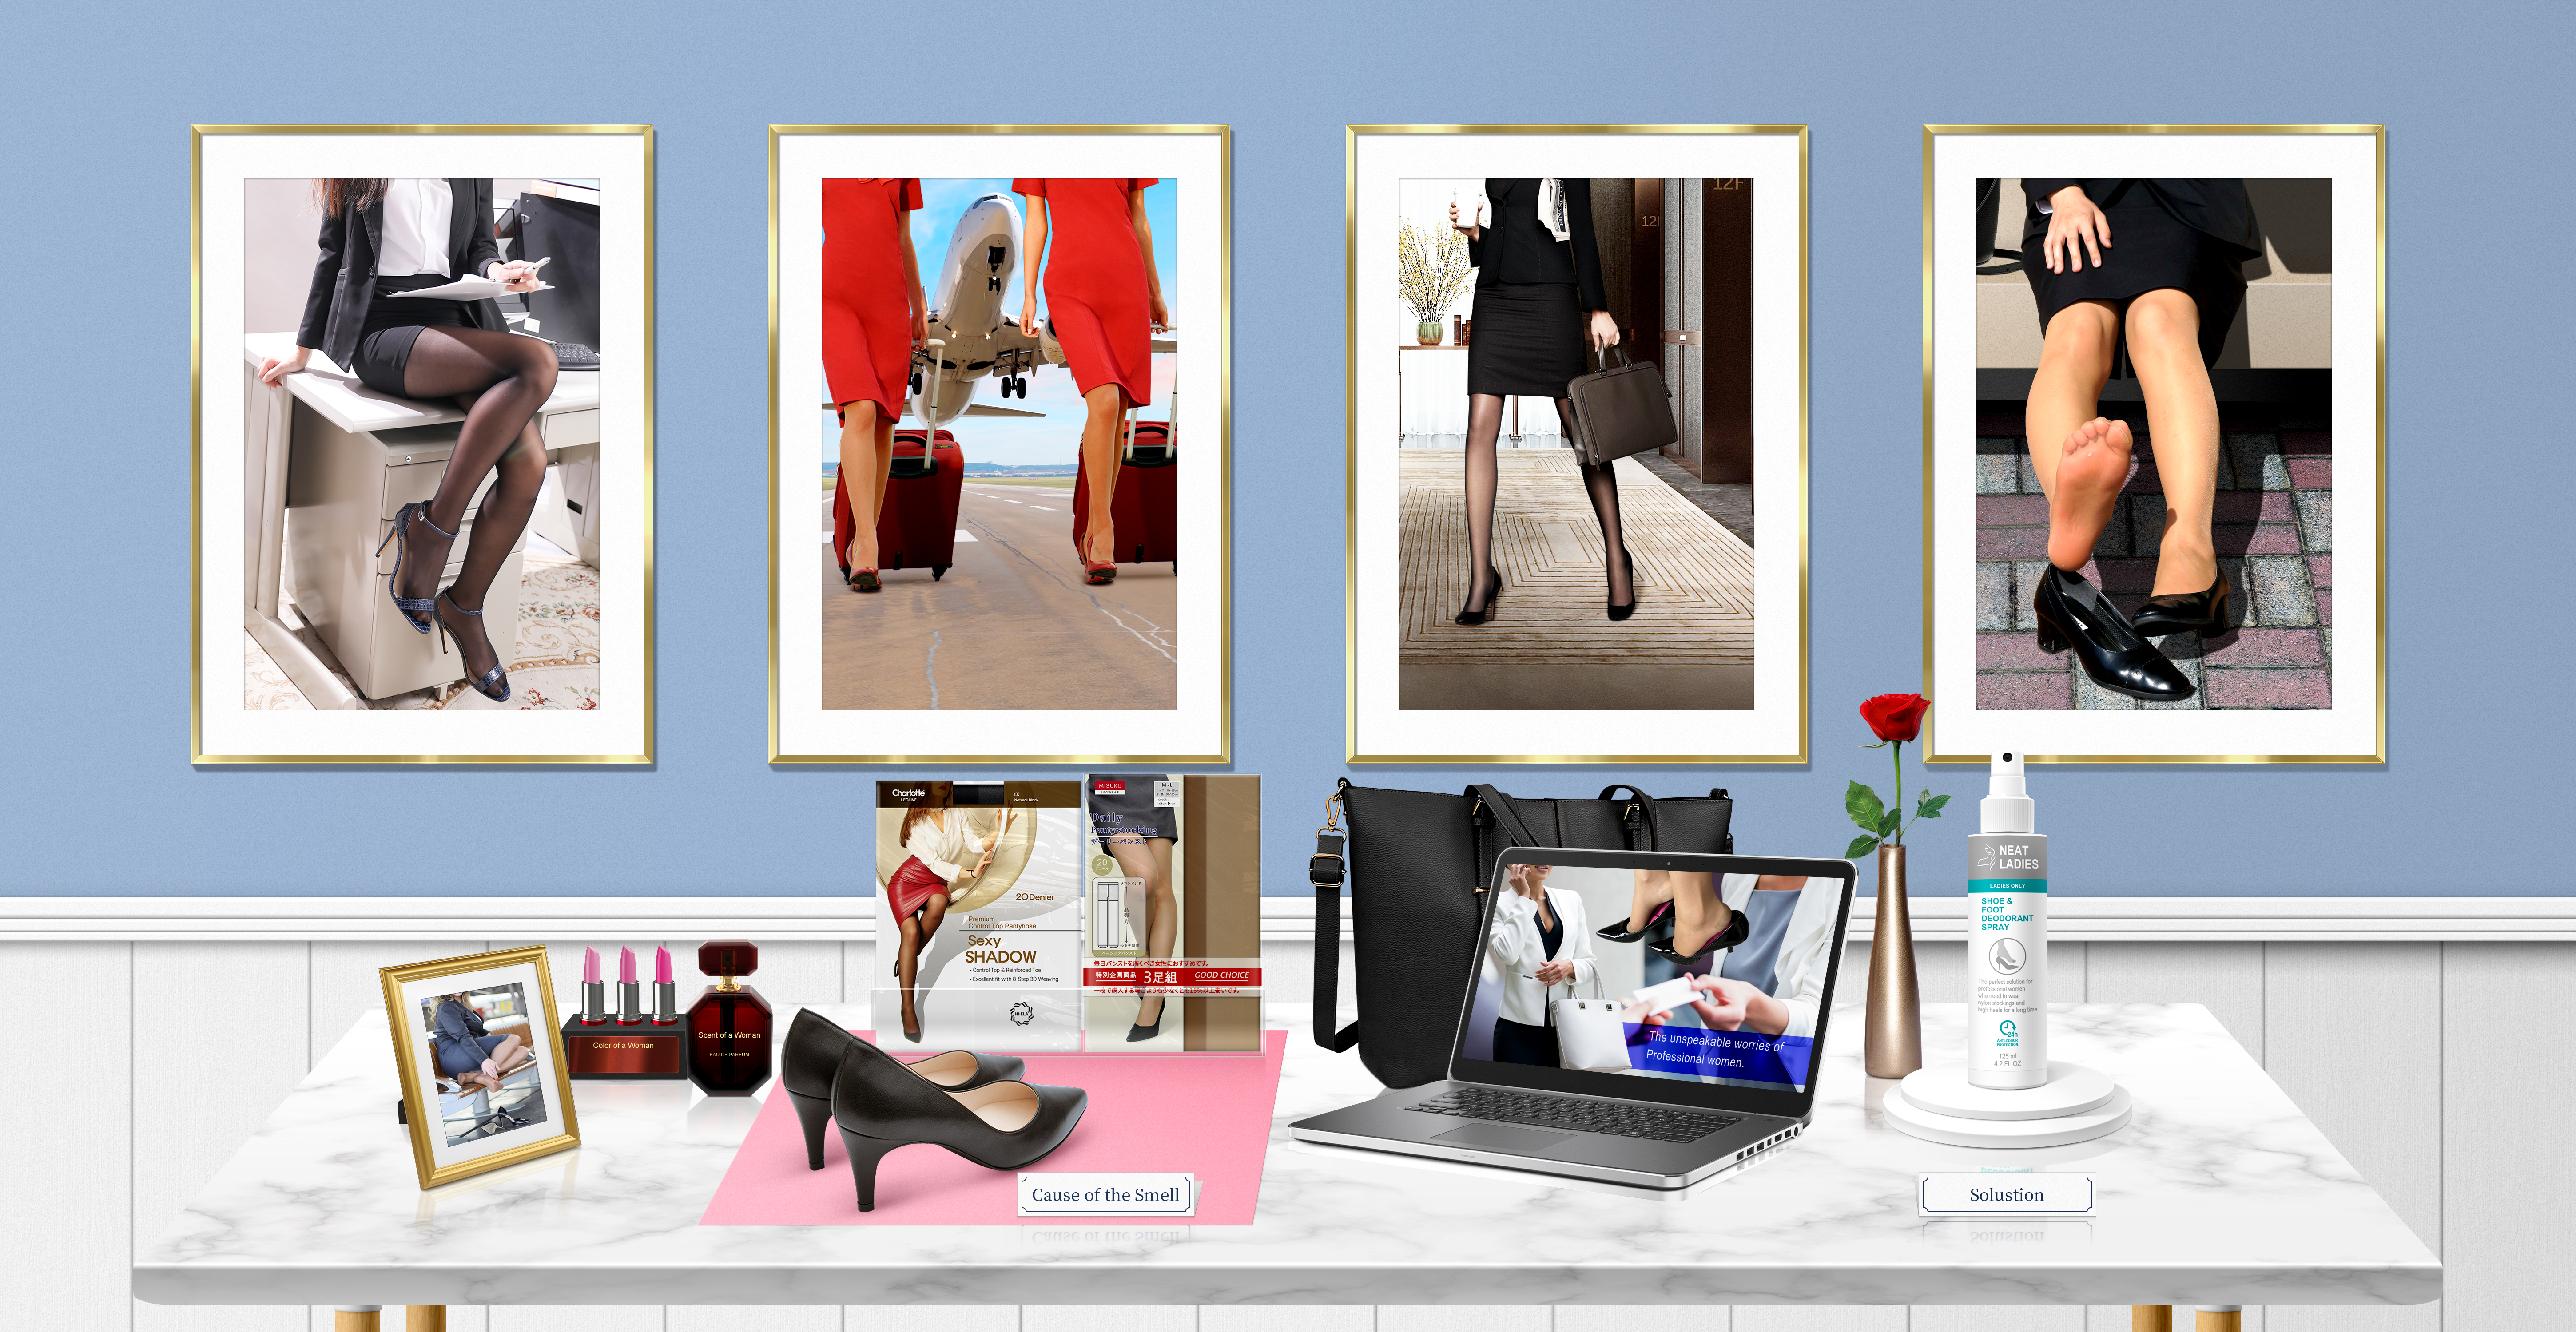 General 5800x3000 wall table high heels frame legs women laptop feet foot sole